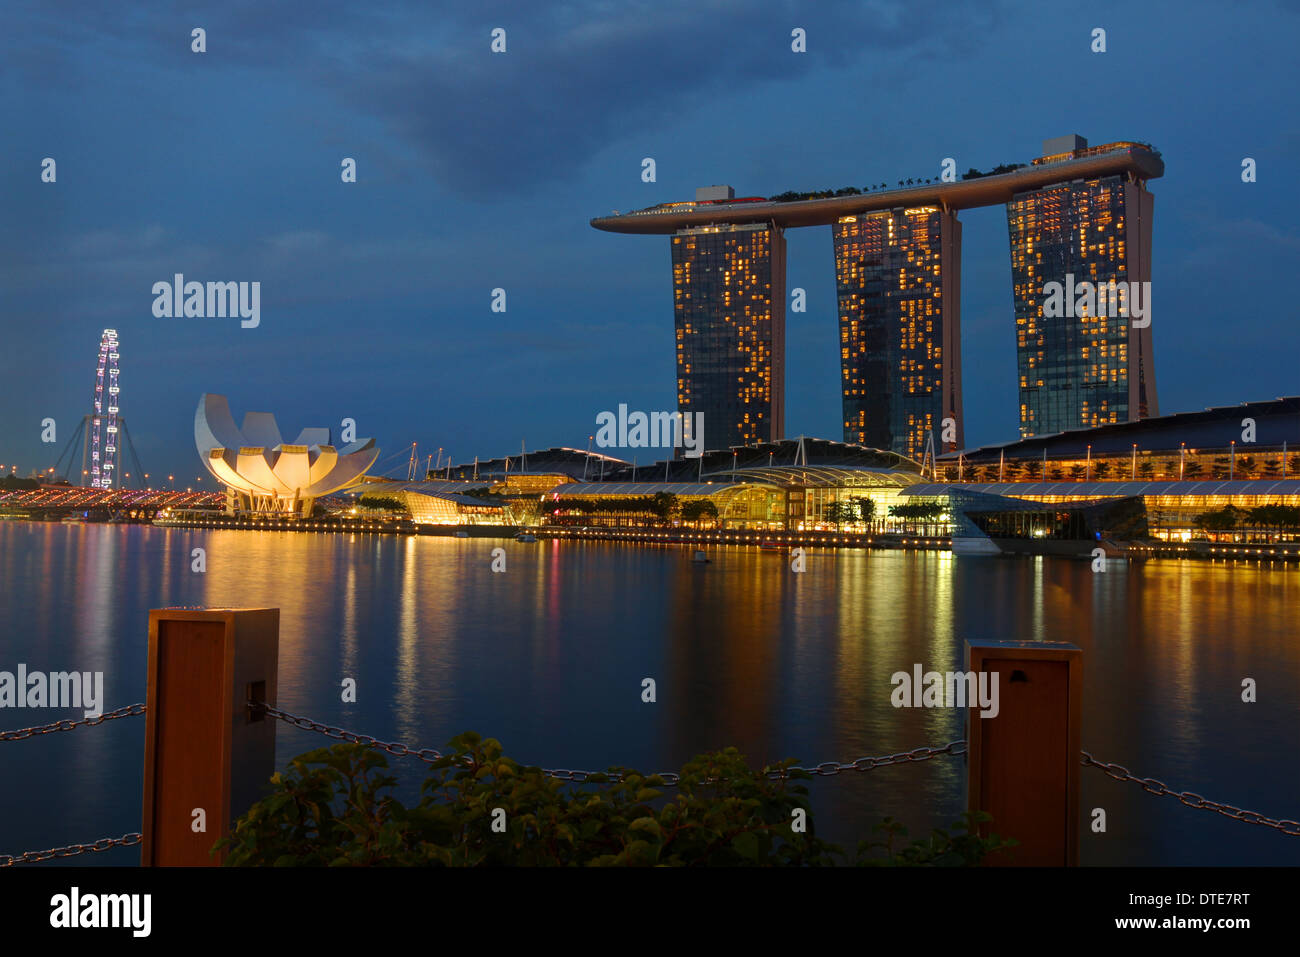 Das Marina Bay Sands Hotel an der Marina District, Singapore. Nacht. Stockfoto